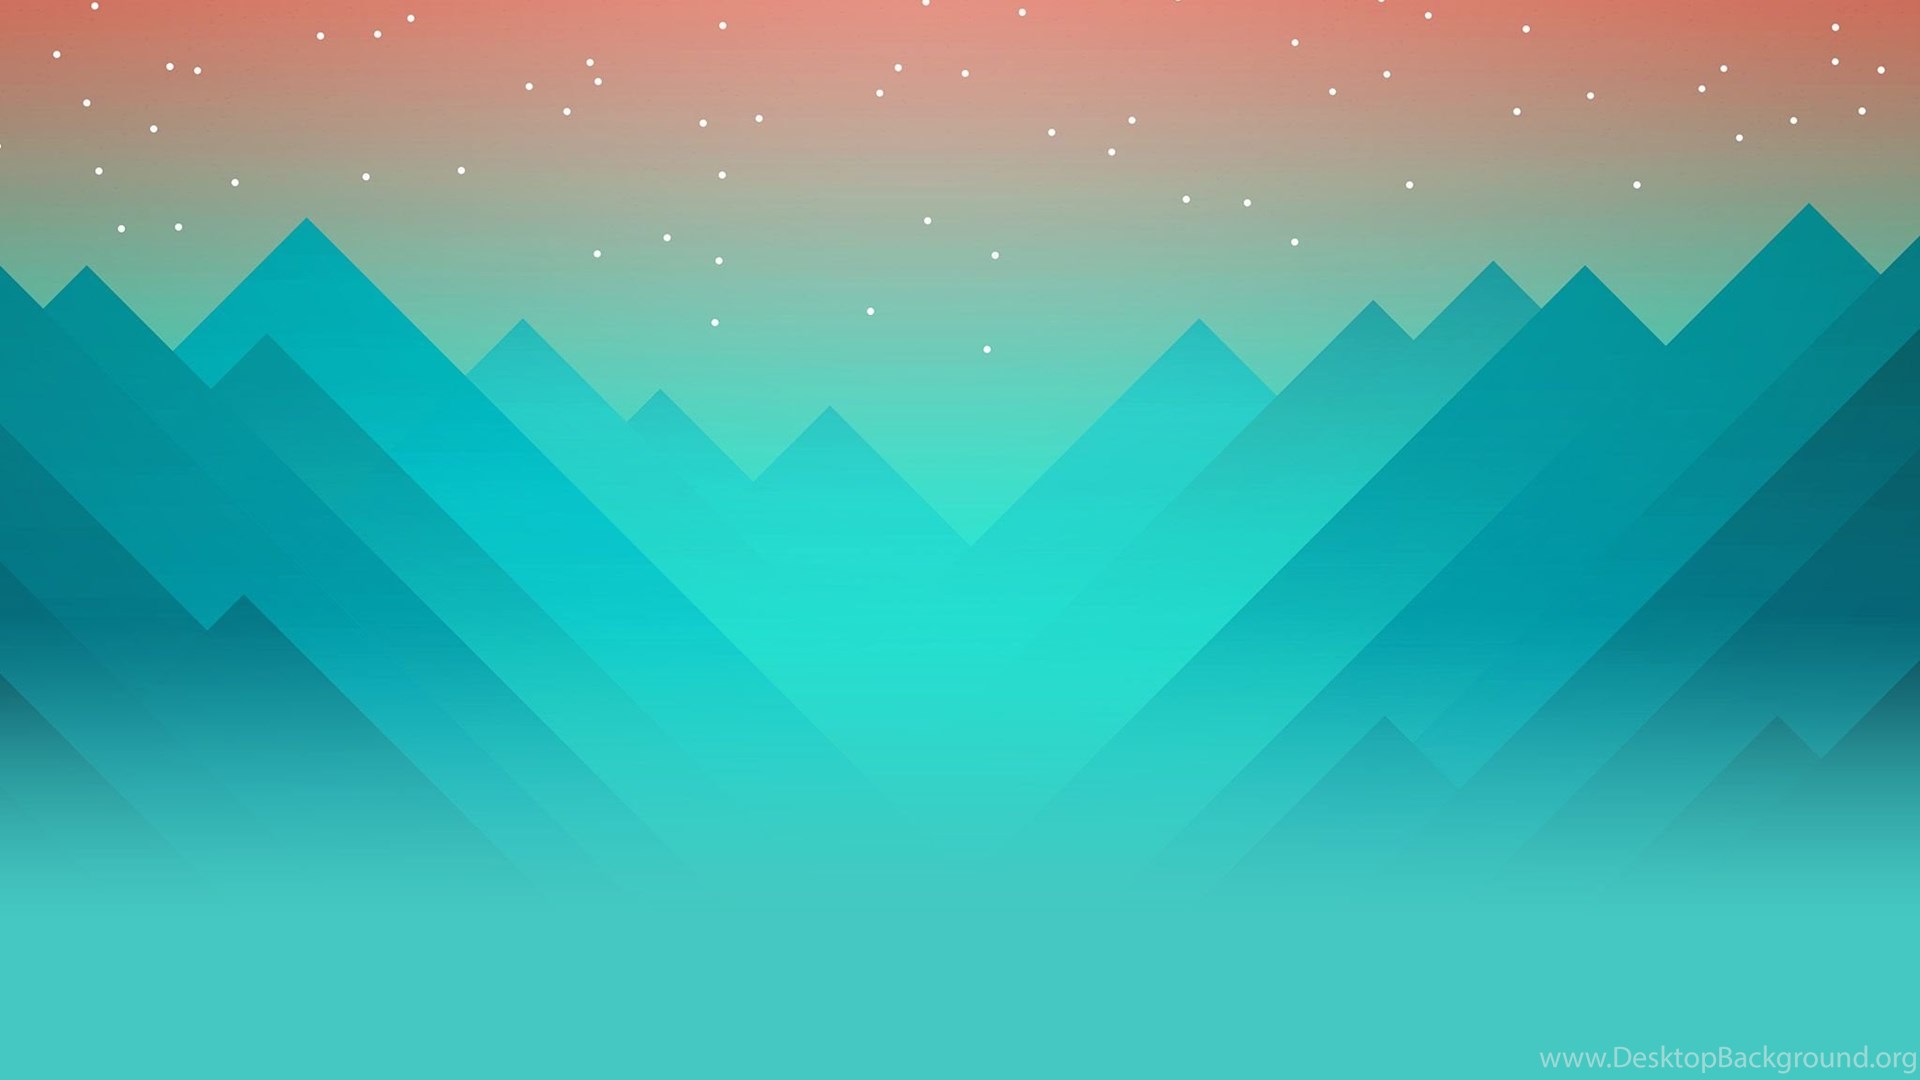 2d Triangle Landscape Wallpaper Desktop Background